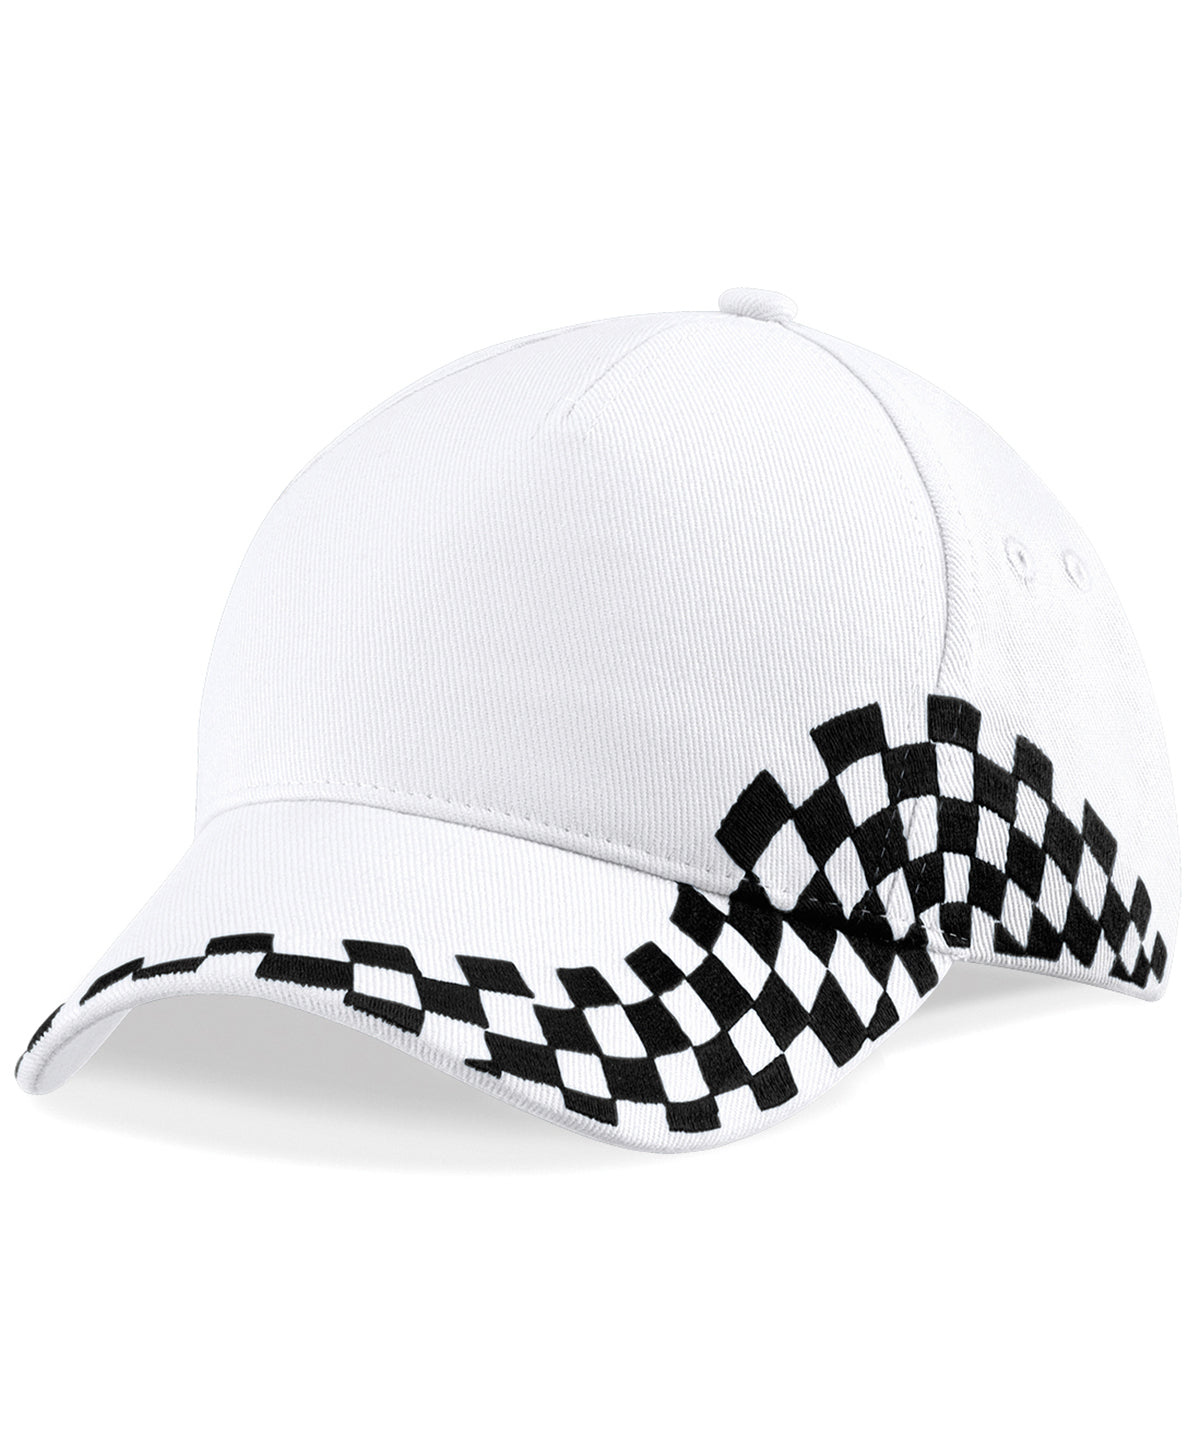 Personalised Caps - White Beechfield Grand Prix cap